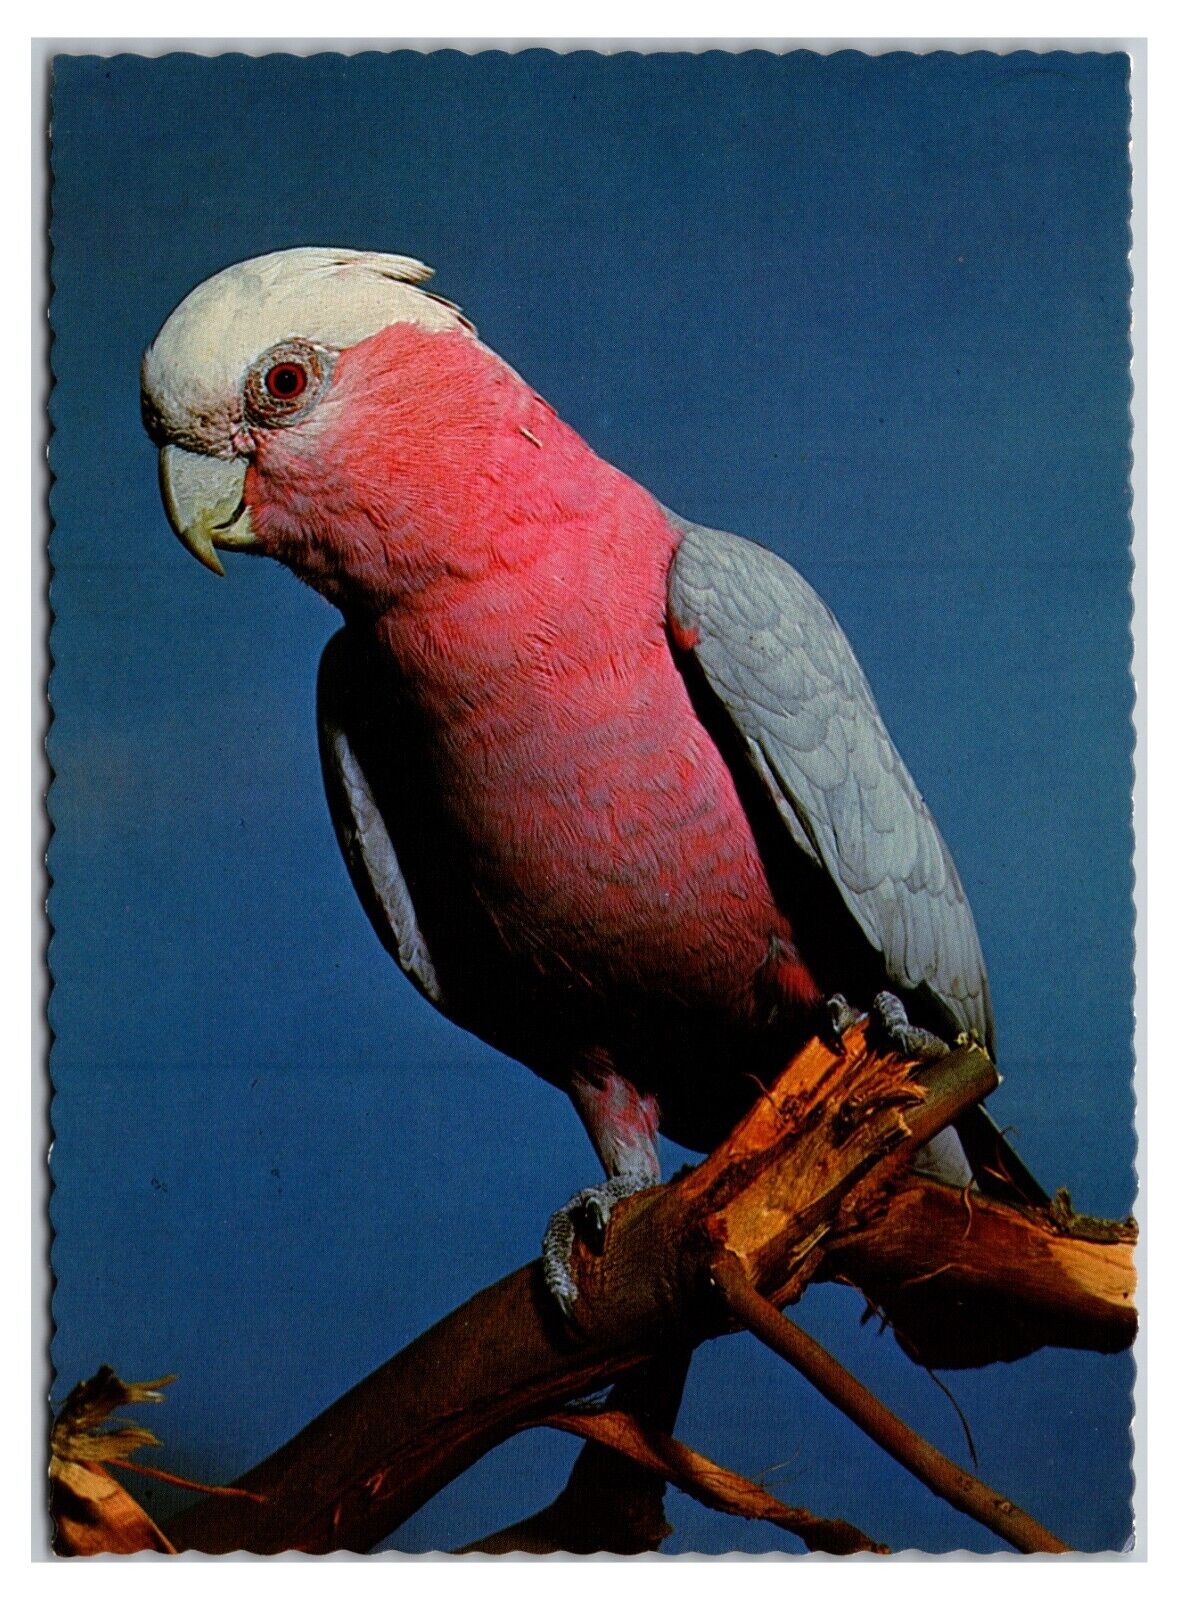 Vintage 1970s - The Galah Bird - Inland Australia Postcard (UnPosted)